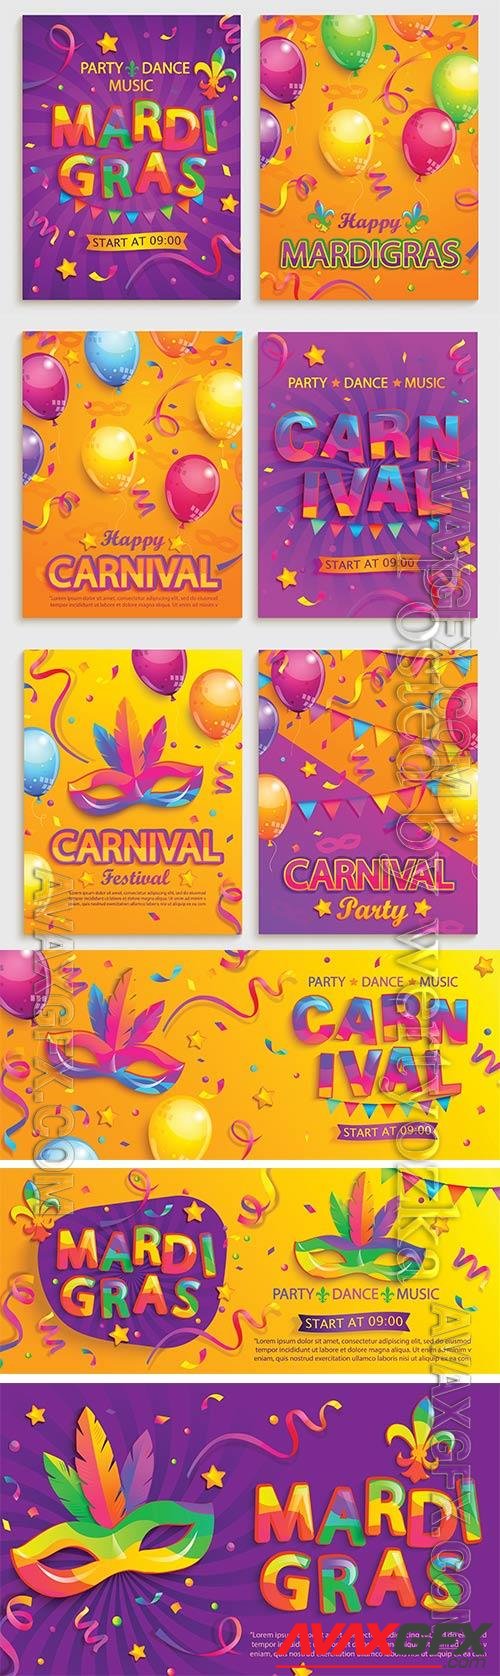 Mardi gras carnival poster, Venice carnival vector design vol 3